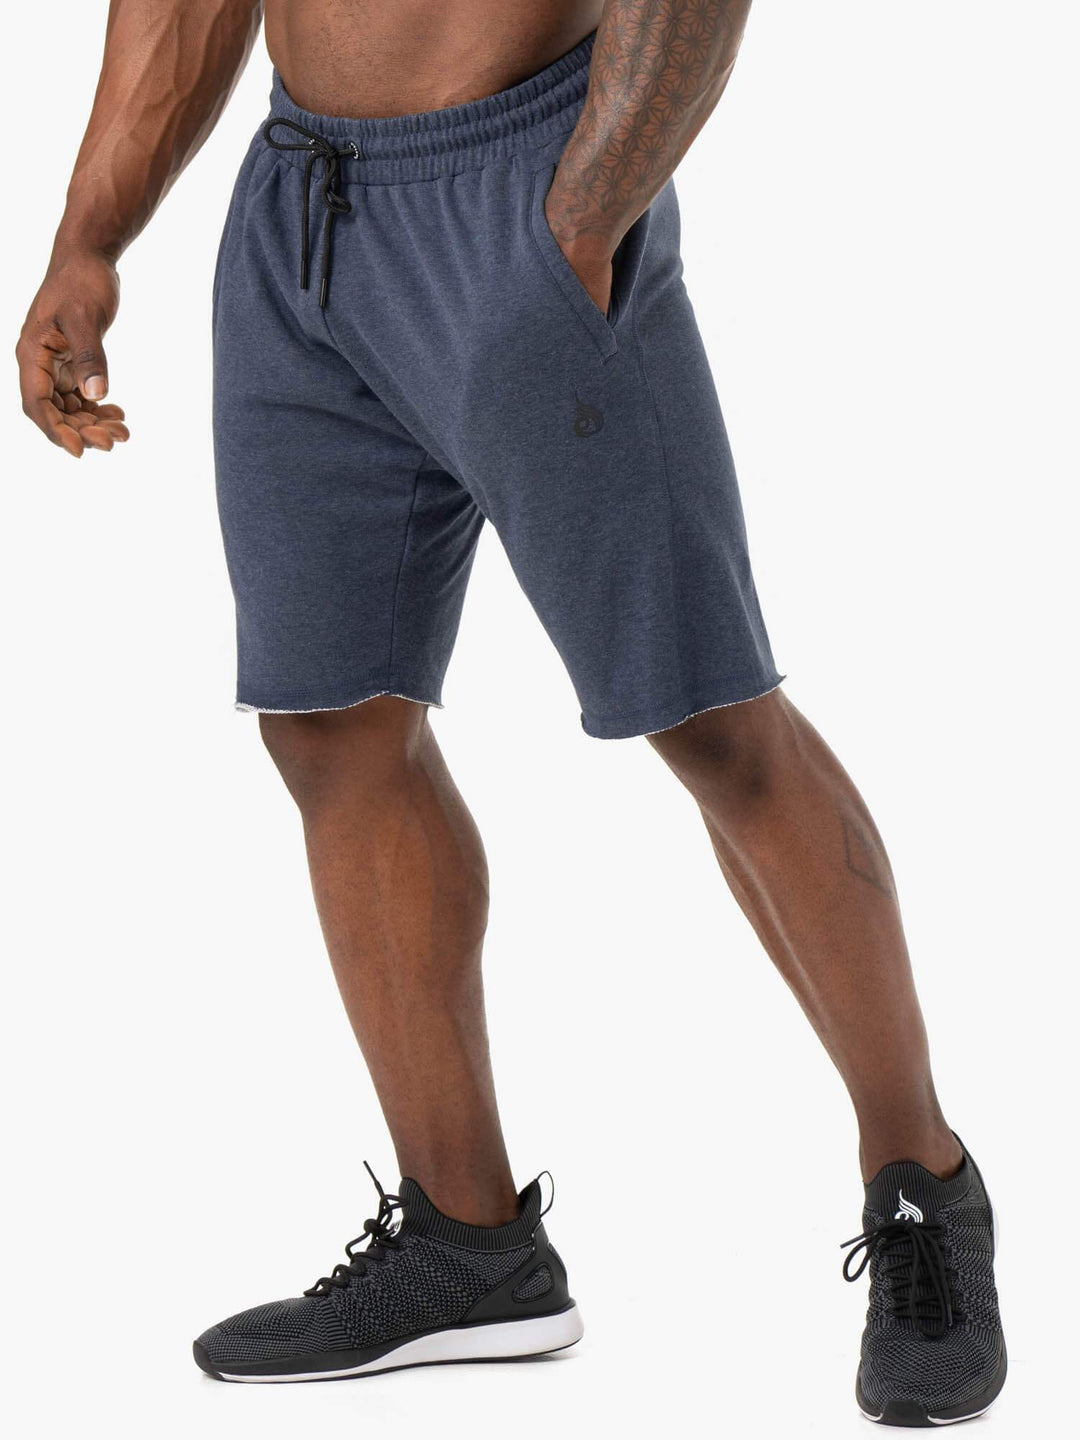 Iron Track Shorts - Navy Marl Clothing Ryderwear 